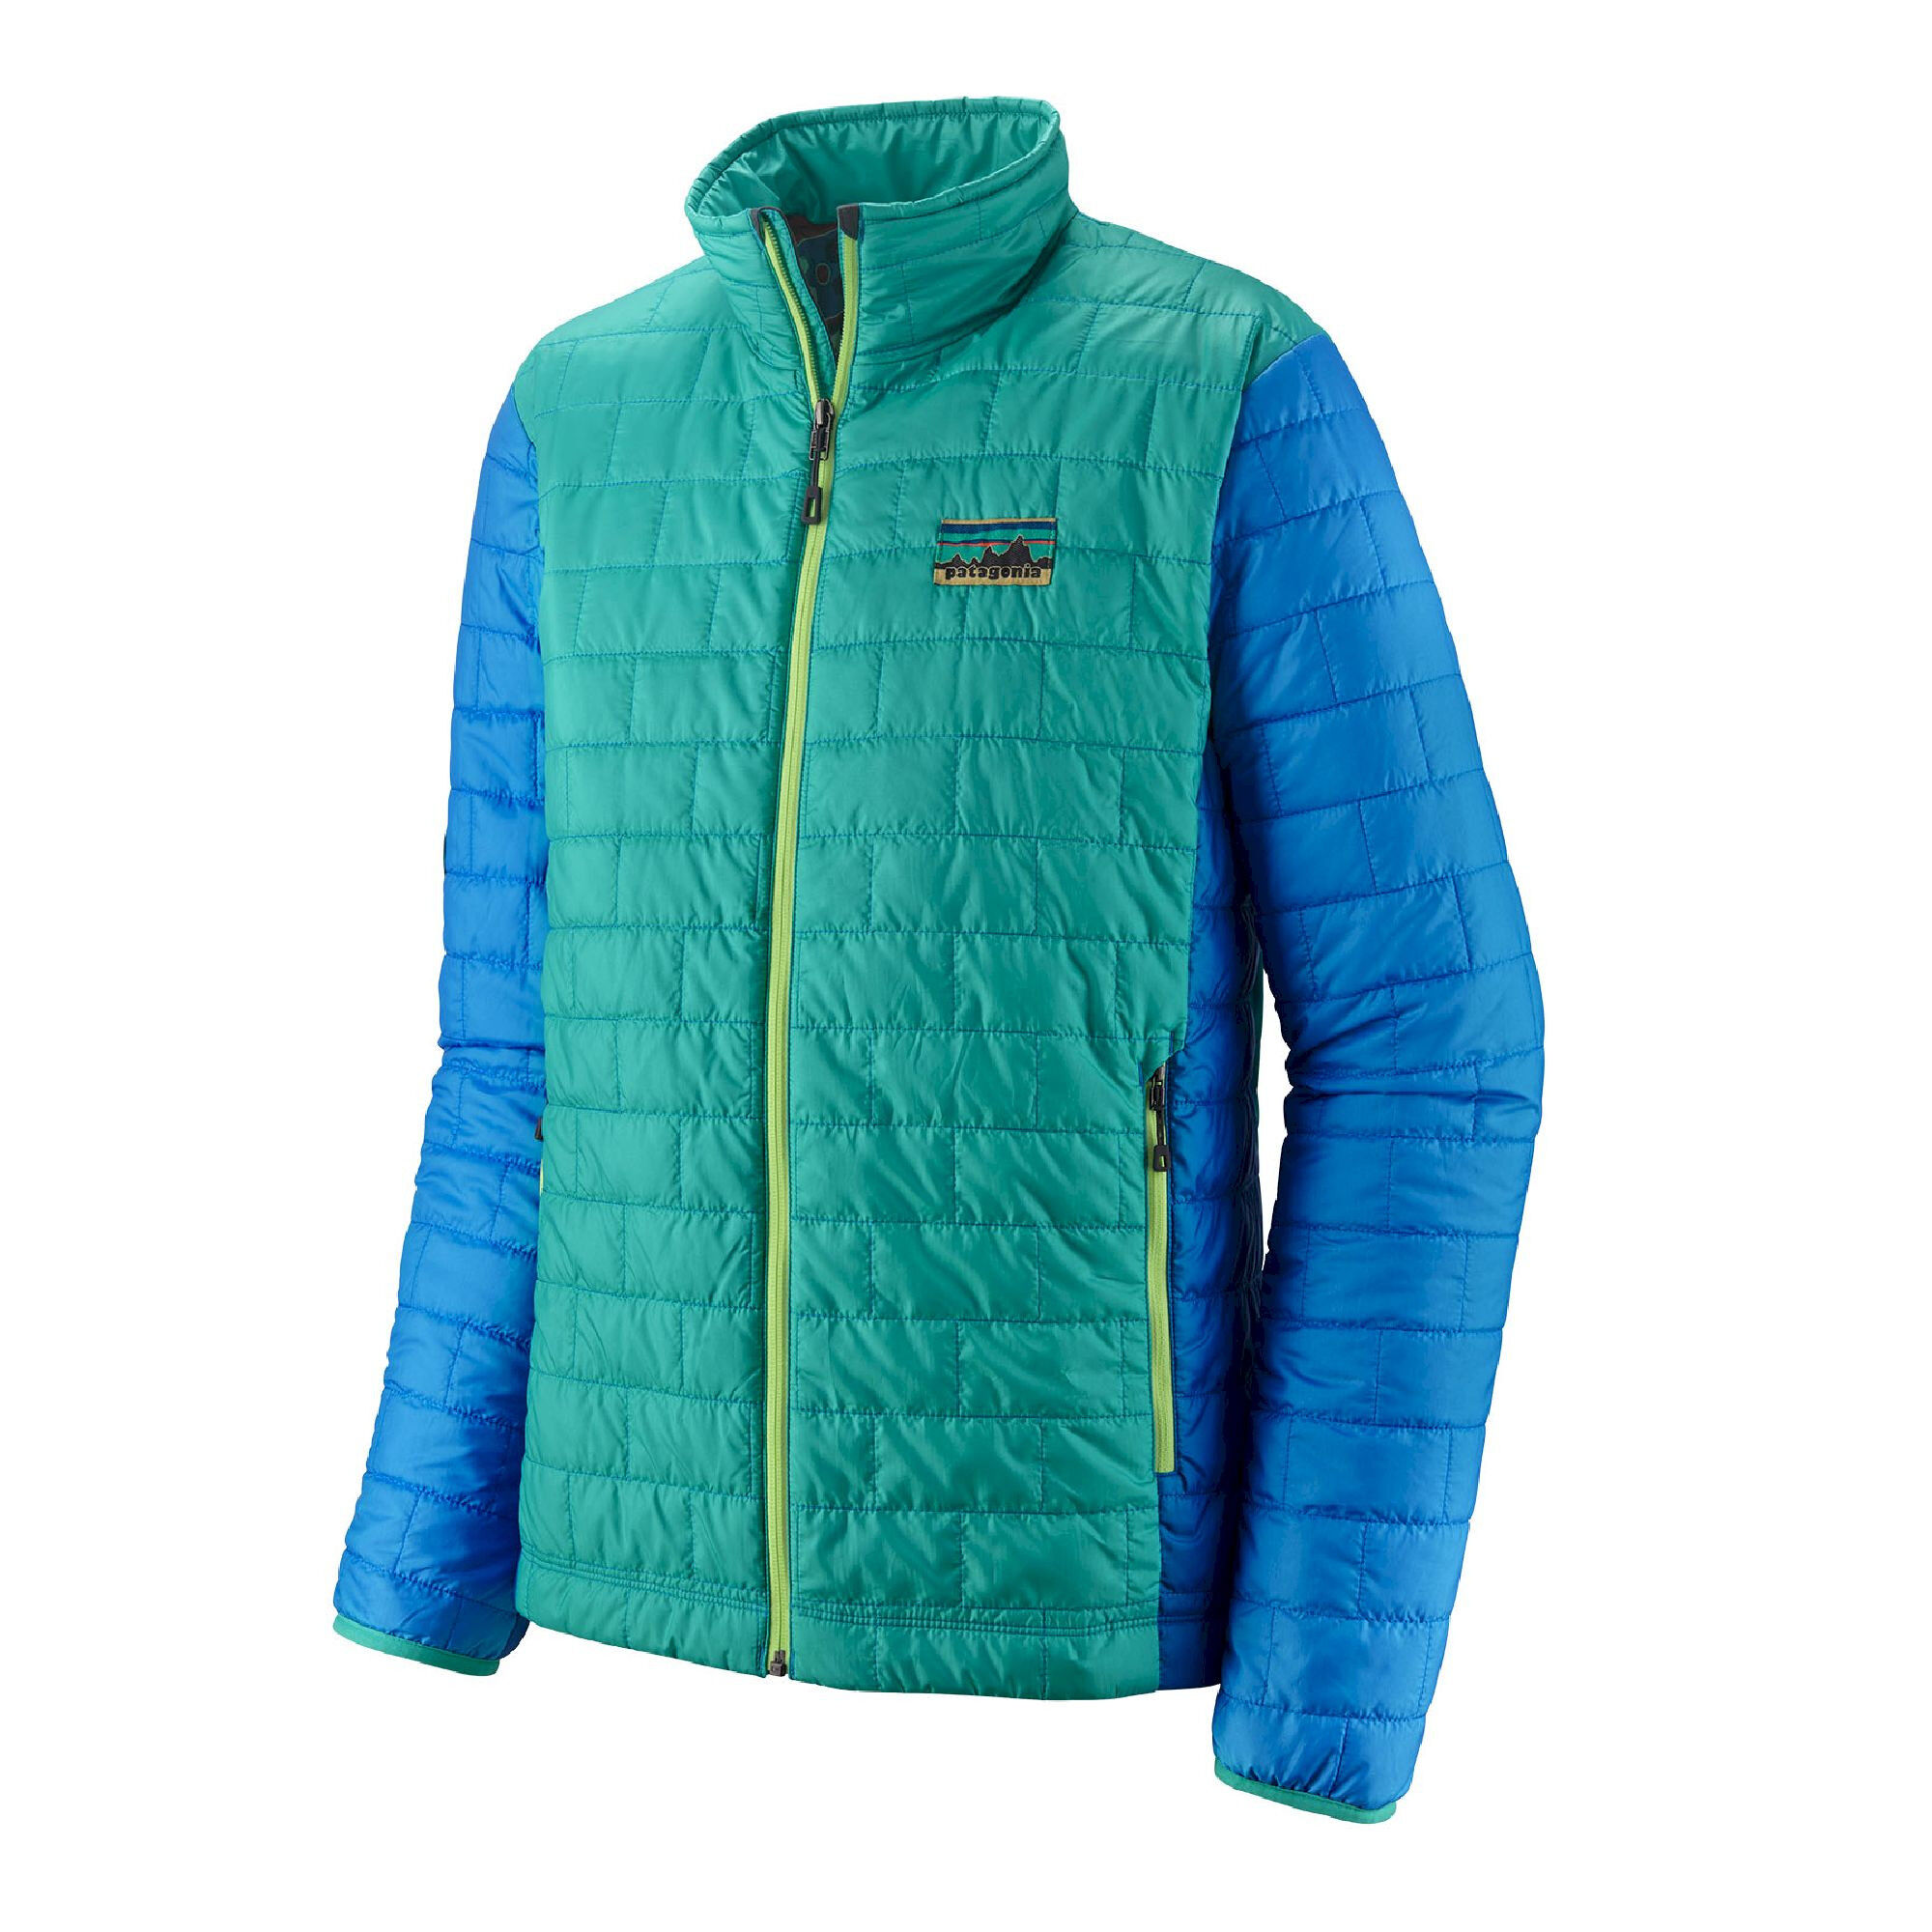 Patagonia - Nano Puff - Insulated jacket - Men's